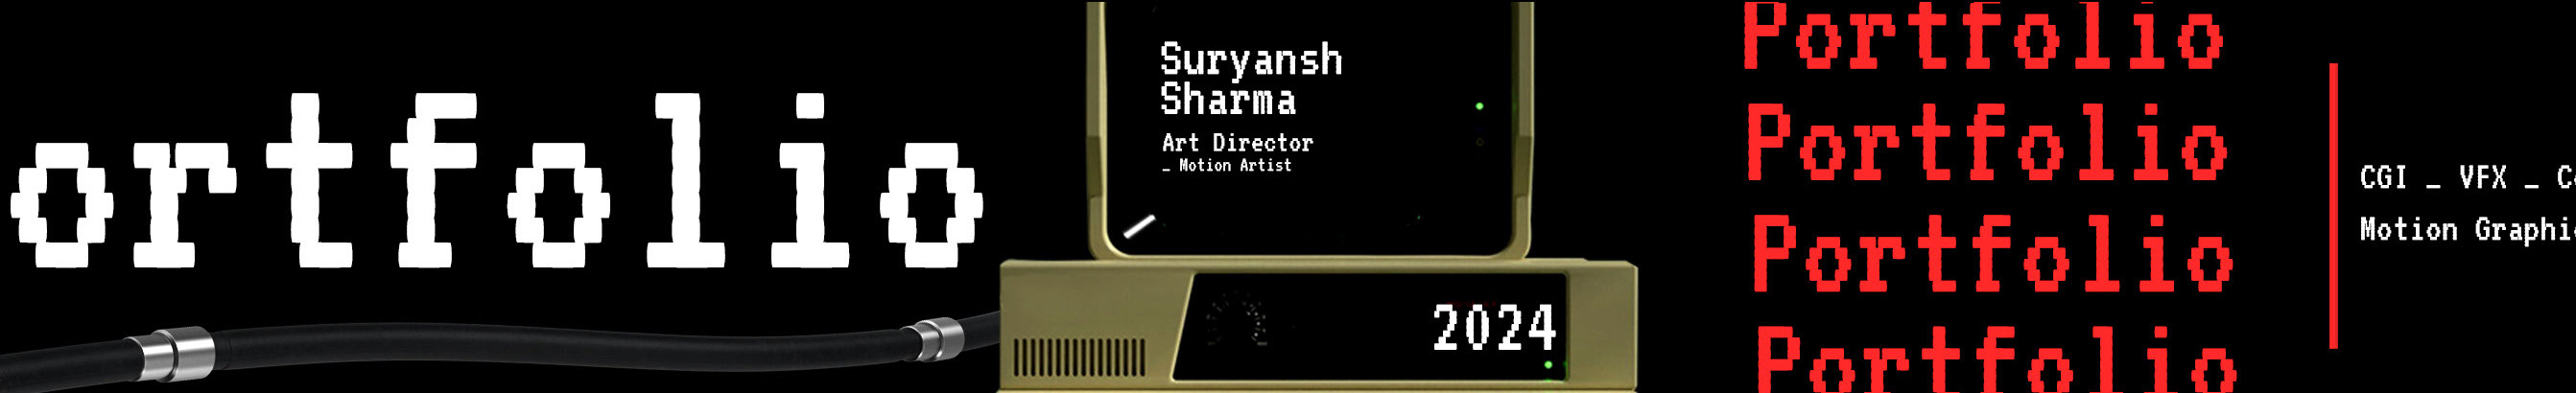 Suryansh Sharma's profile banner